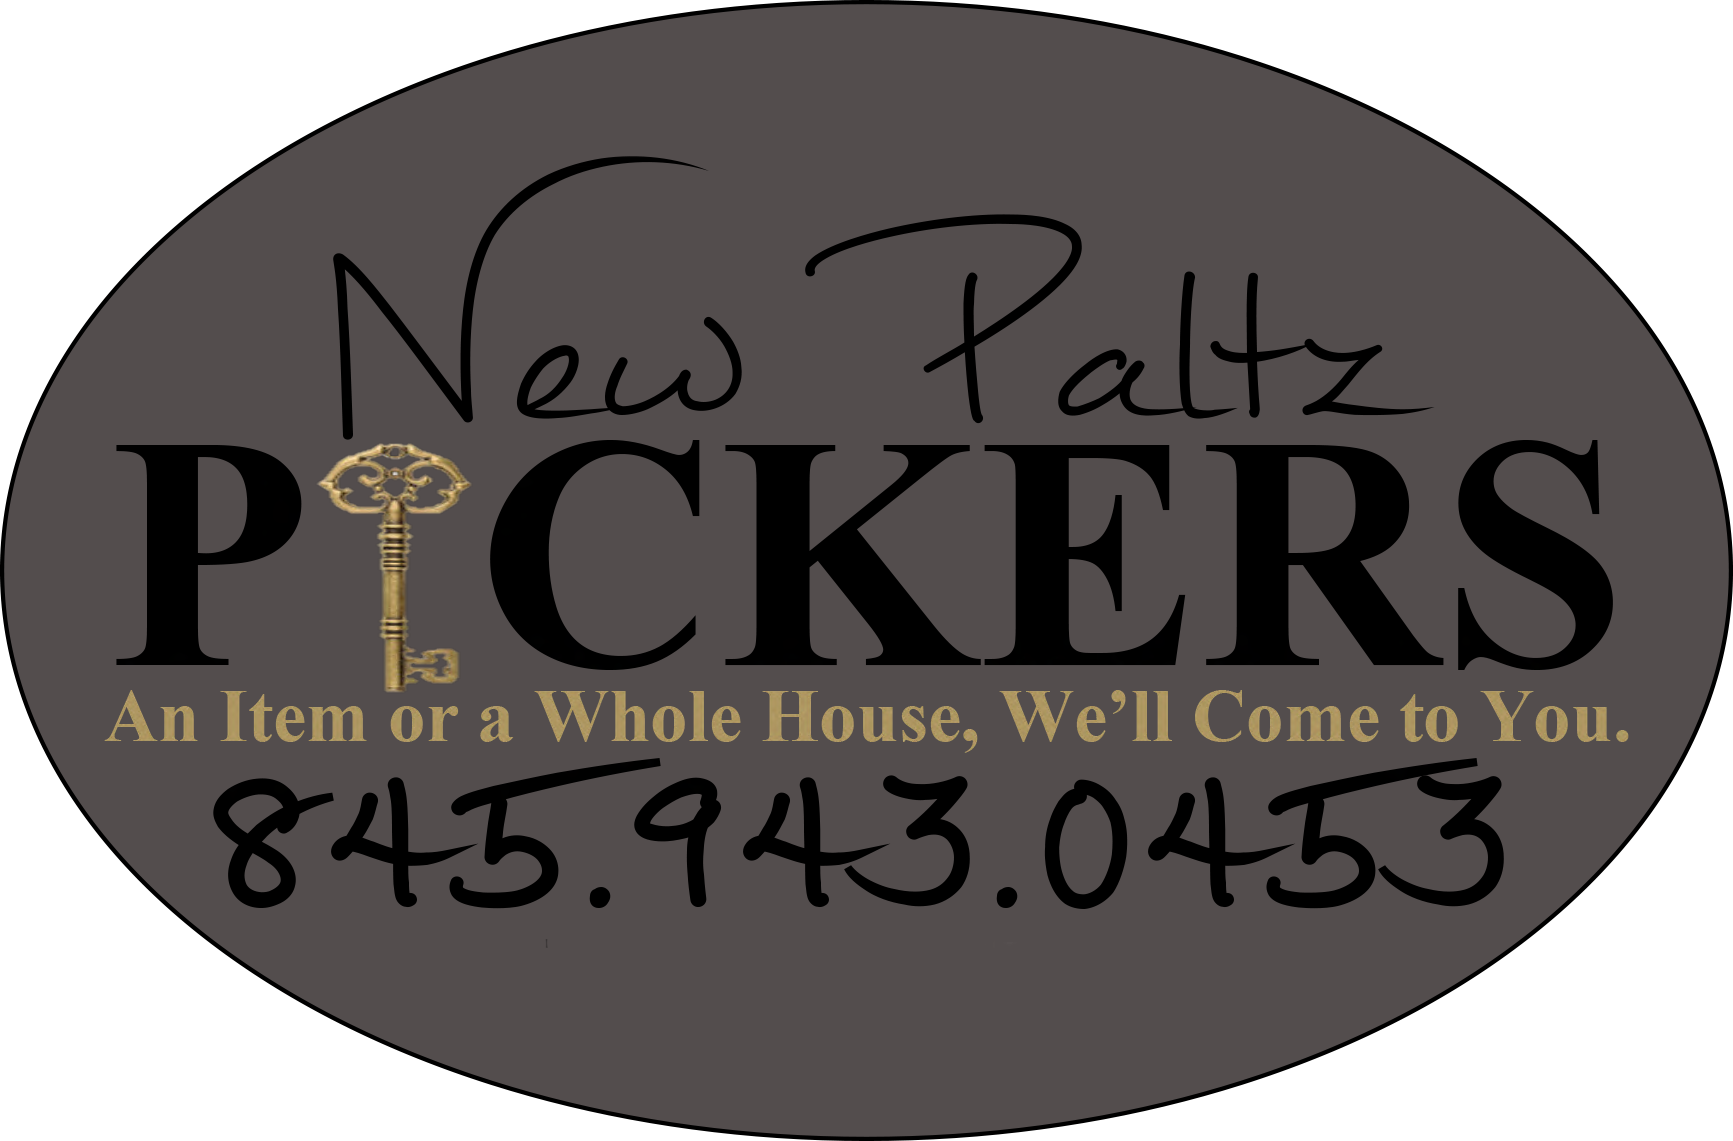 New Paltz Pickers Logo ellipse